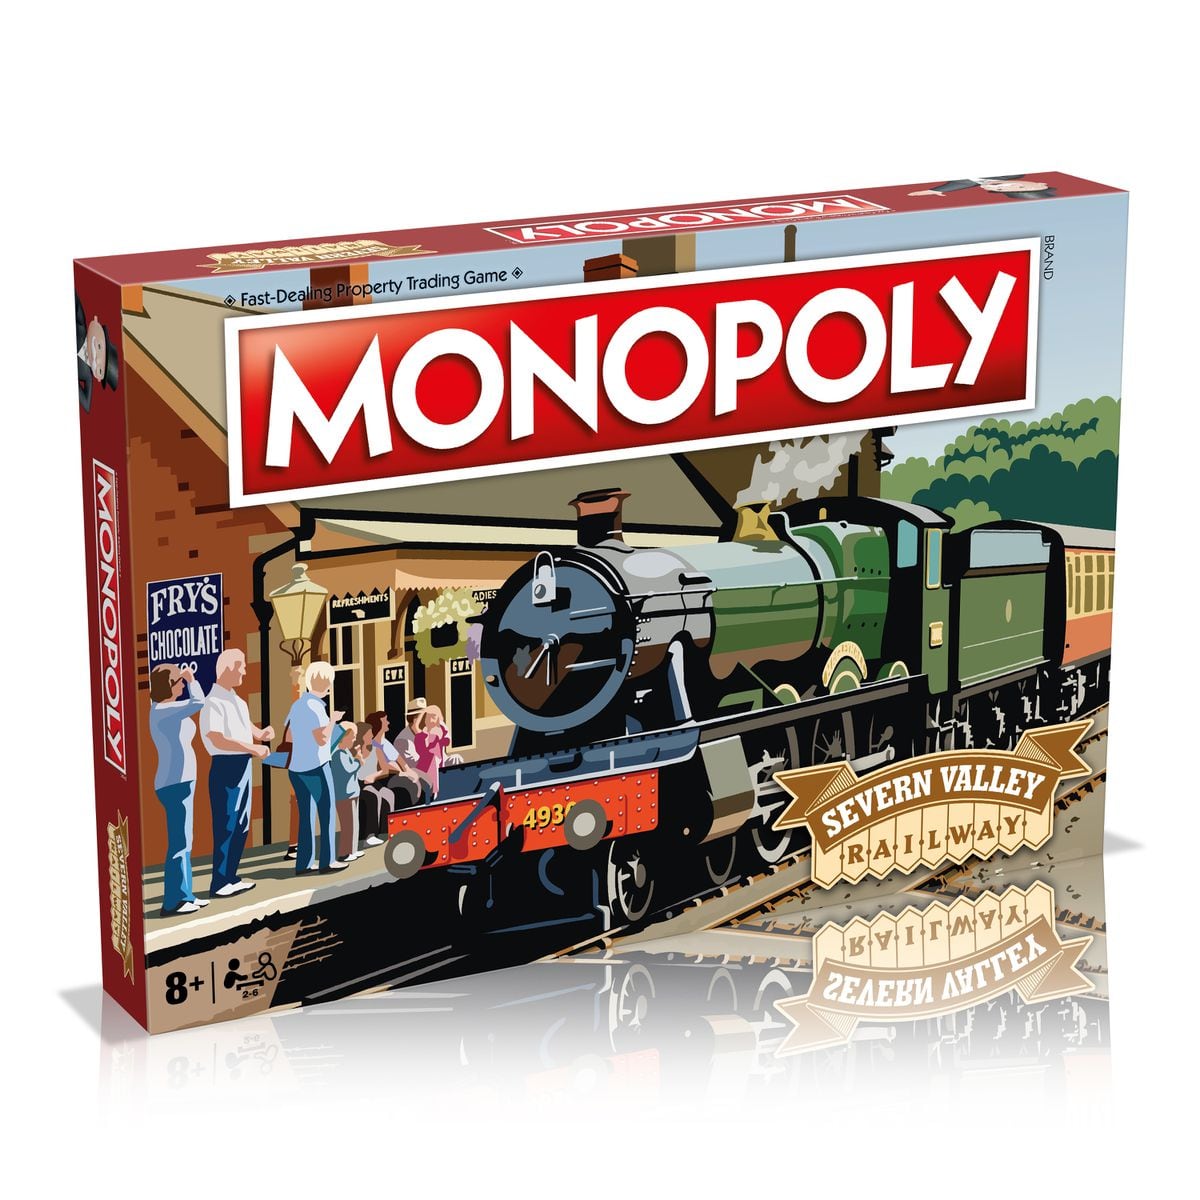 Severn Valley Railway design a Monopoly board